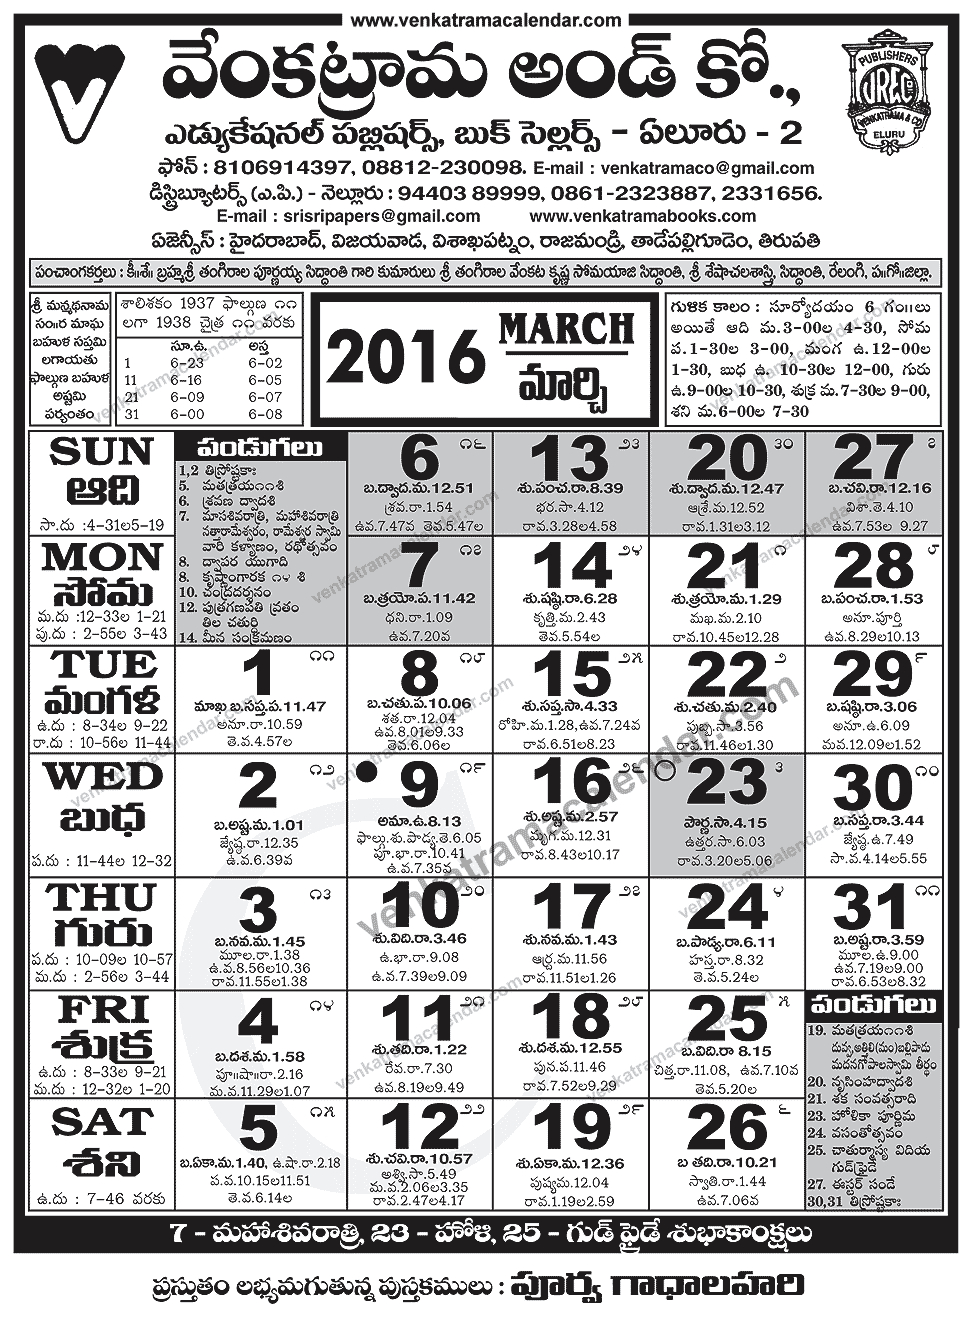 Venkatrama Co 2016 March Telugu Calendar Festivals &amp; Holidays